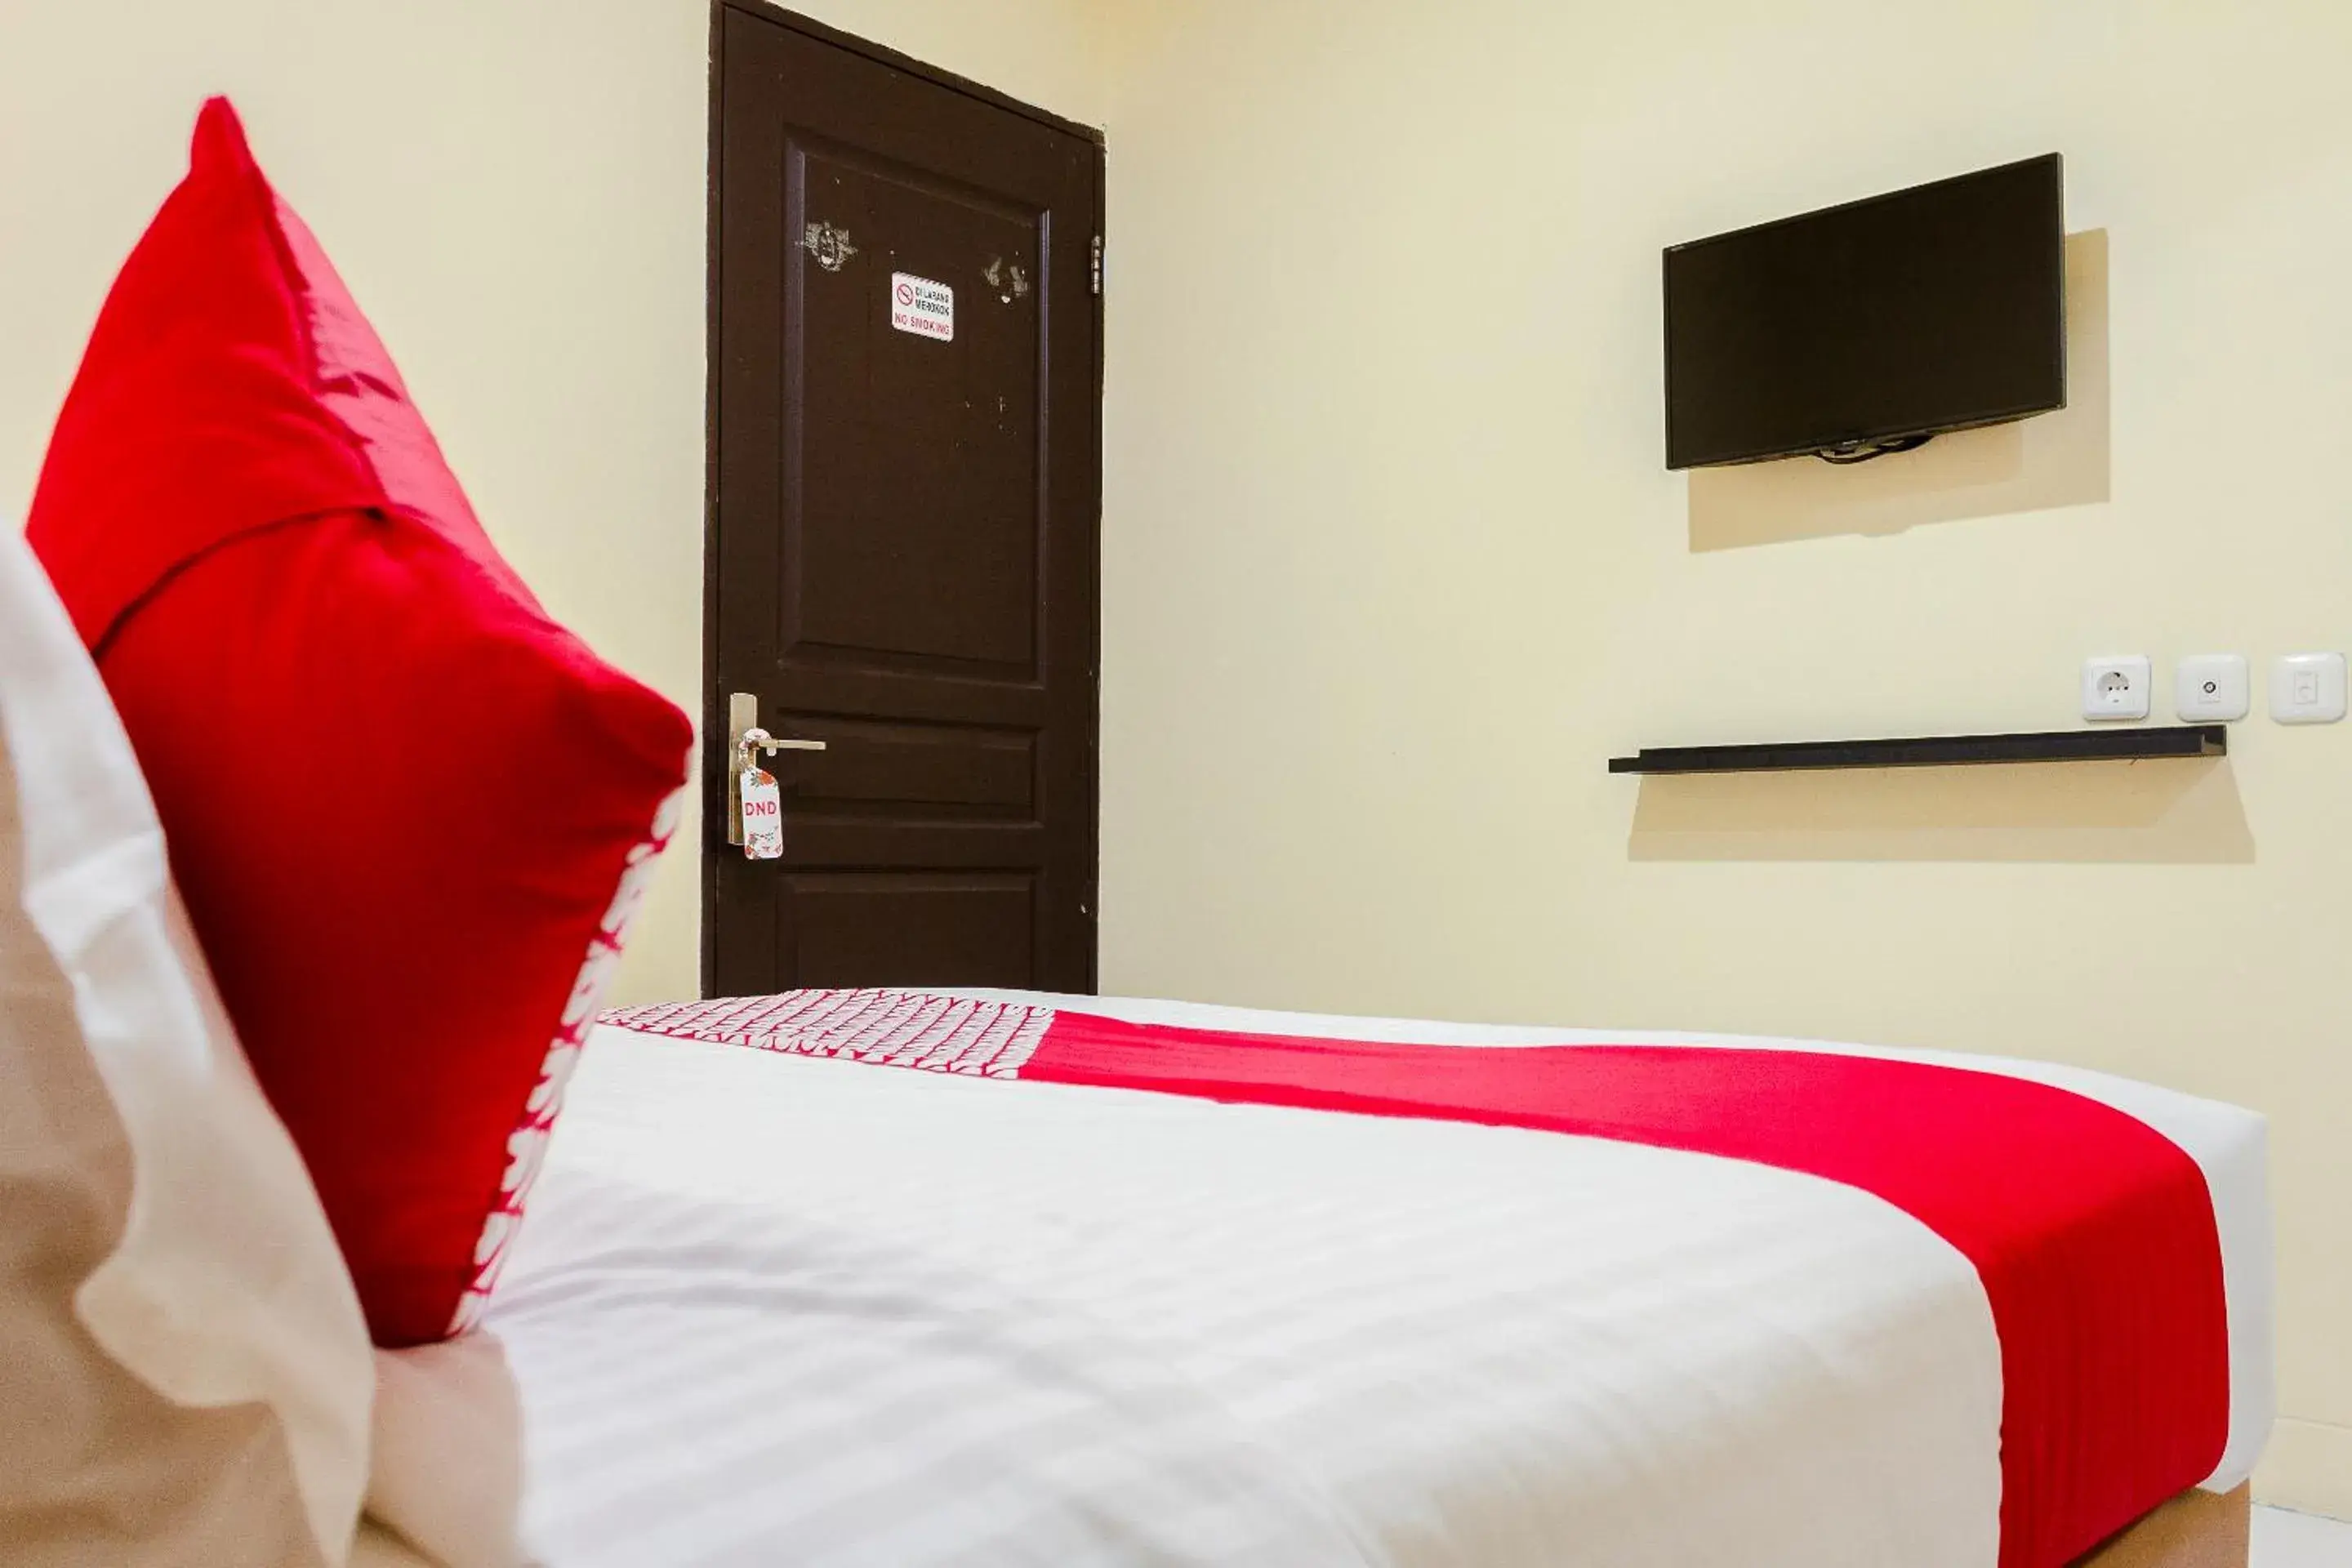 Bedroom, TV/Entertainment Center in Capital O 137 Permata Tawakal